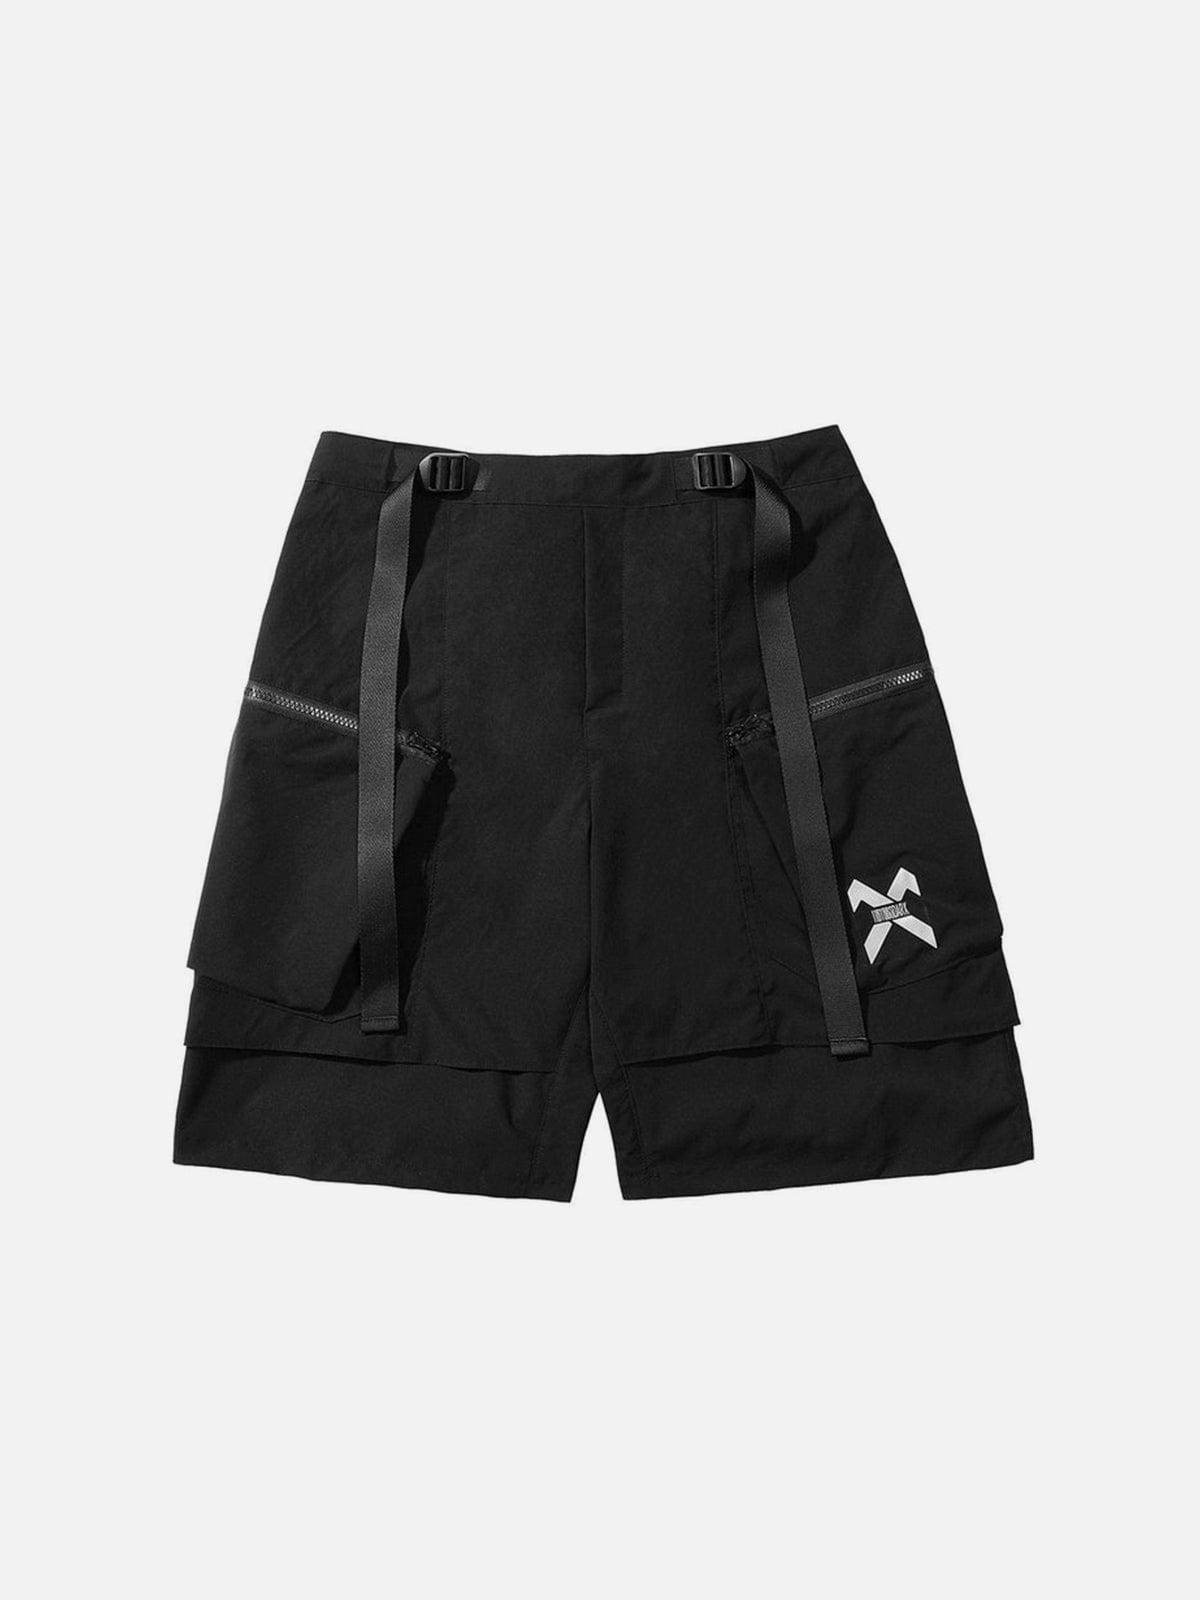 Function Long Zip Up Cargo Shorts Streetwear Brand Techwear Combat Tactical YUGEN THEORY